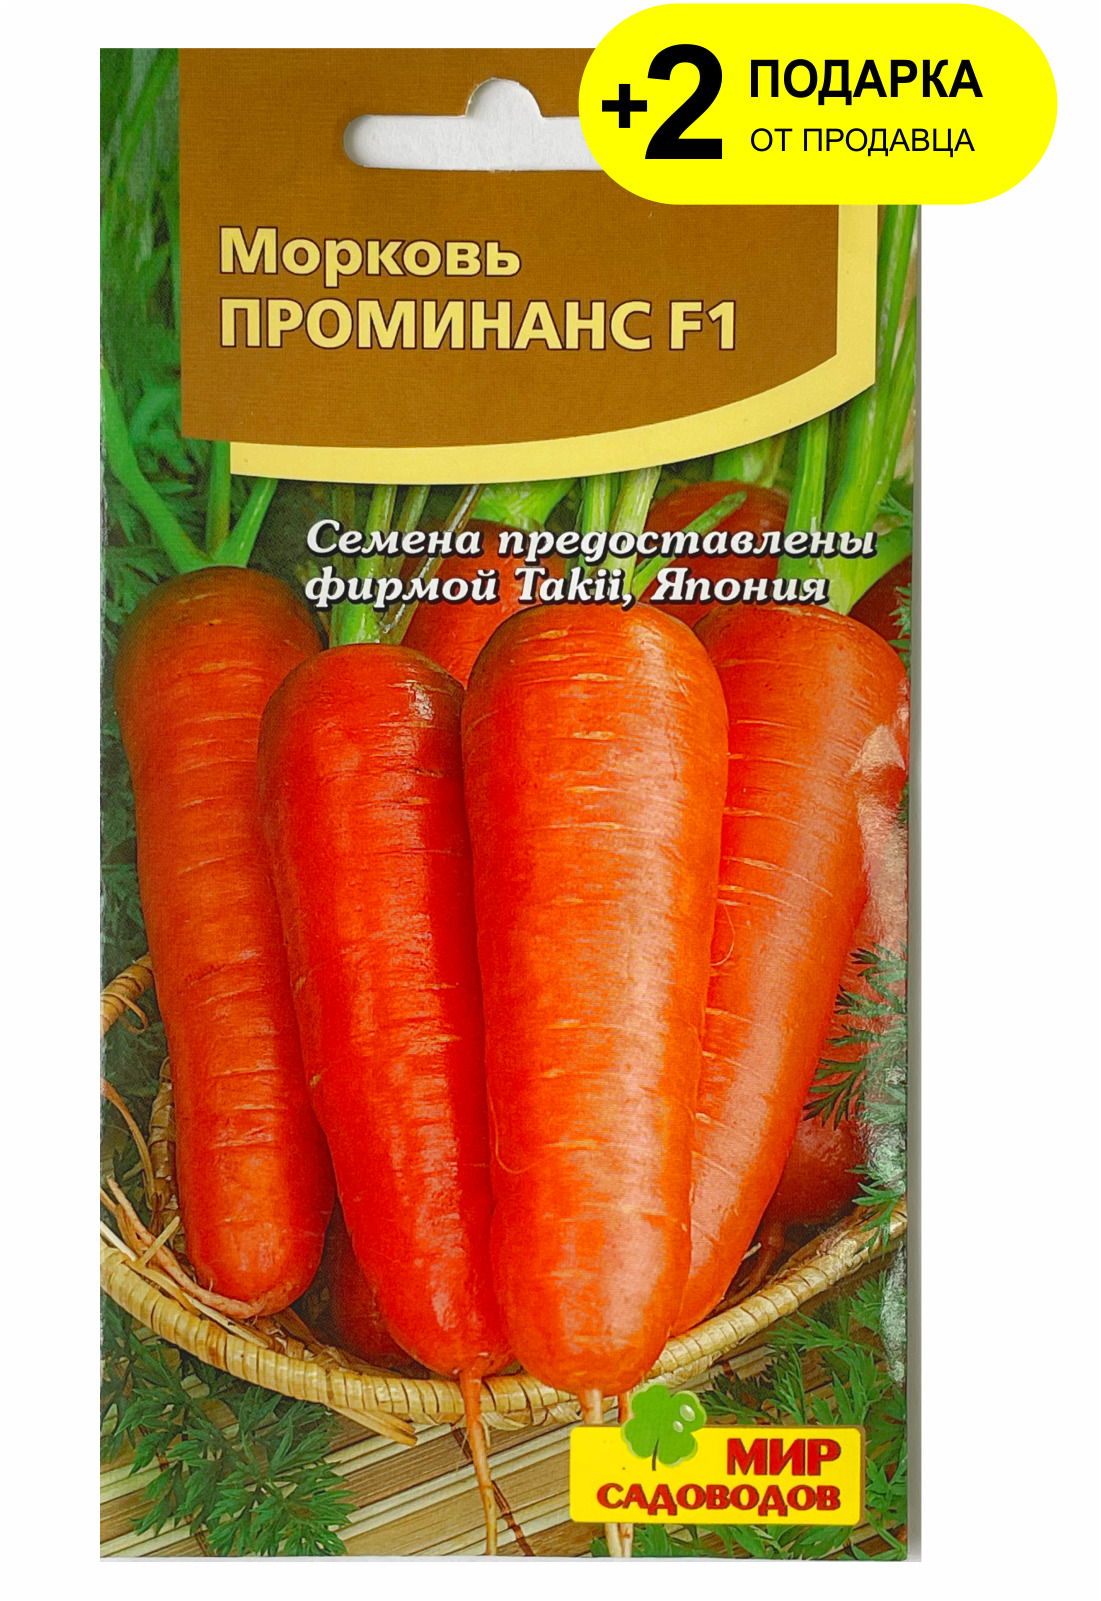 Морковь Проминанс f1